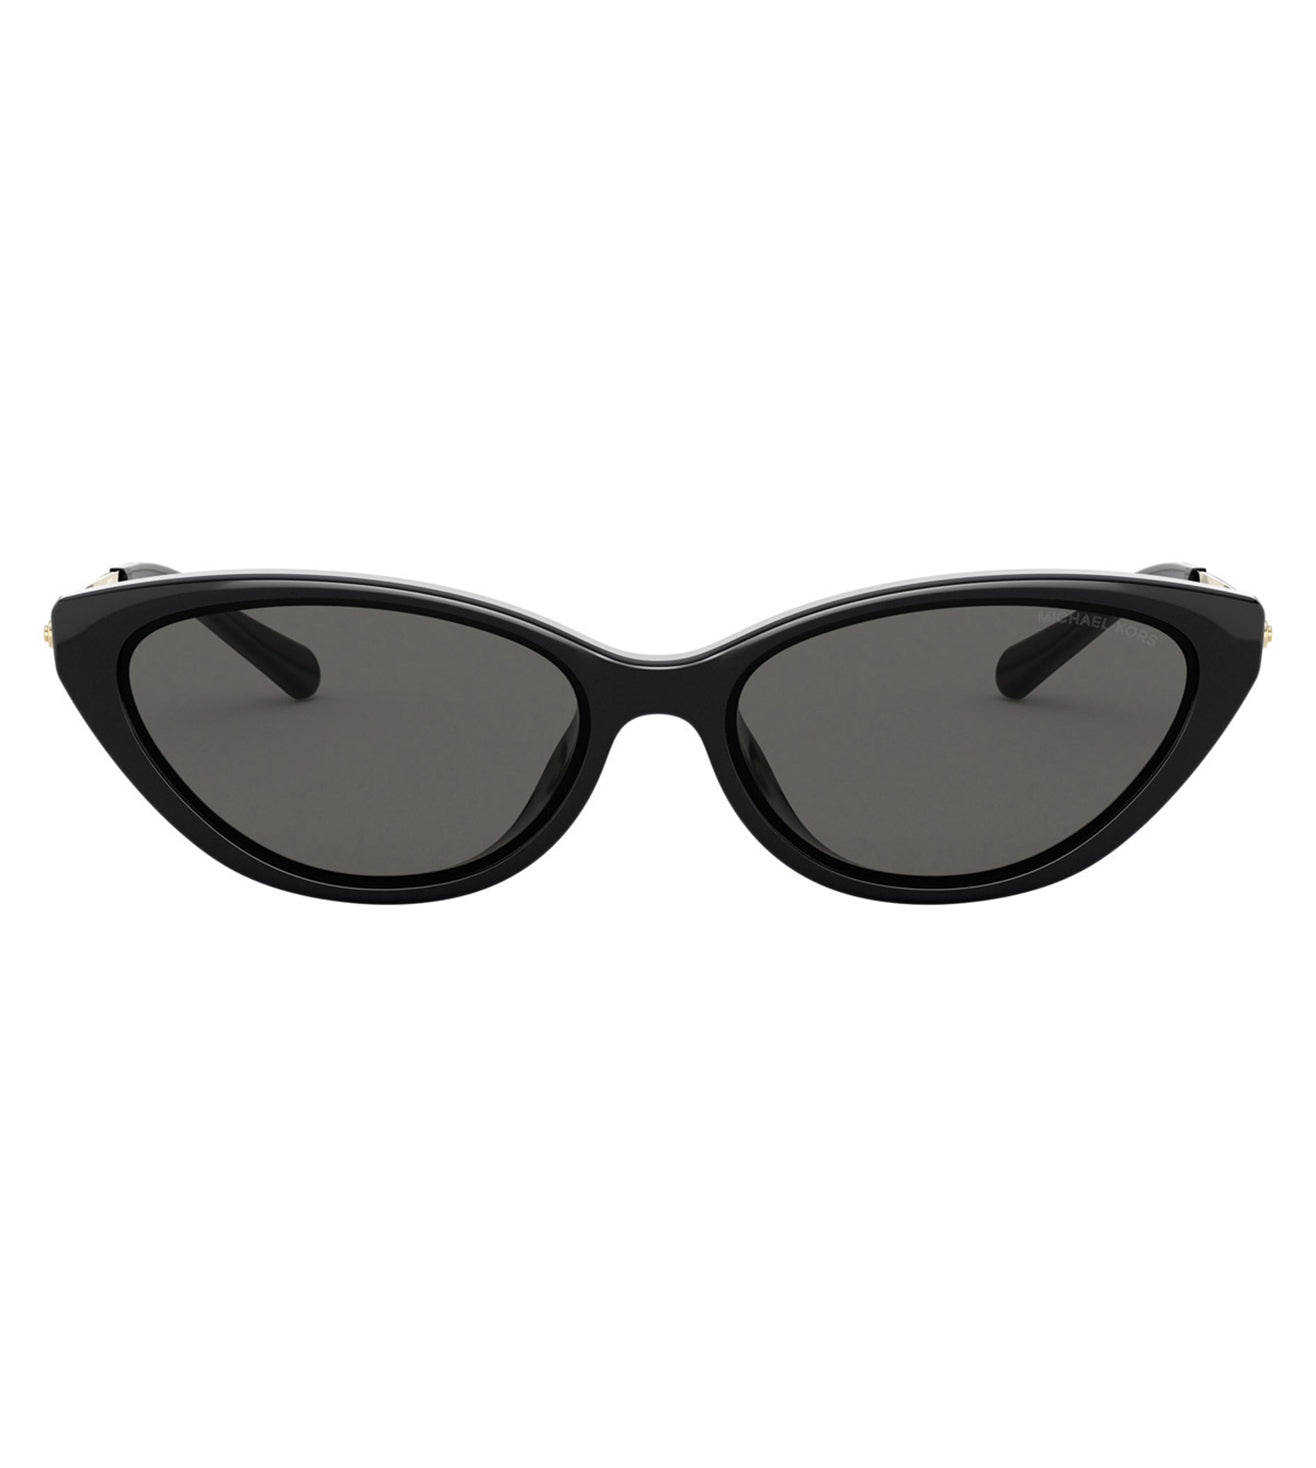 Cateye Grey Sunglasses